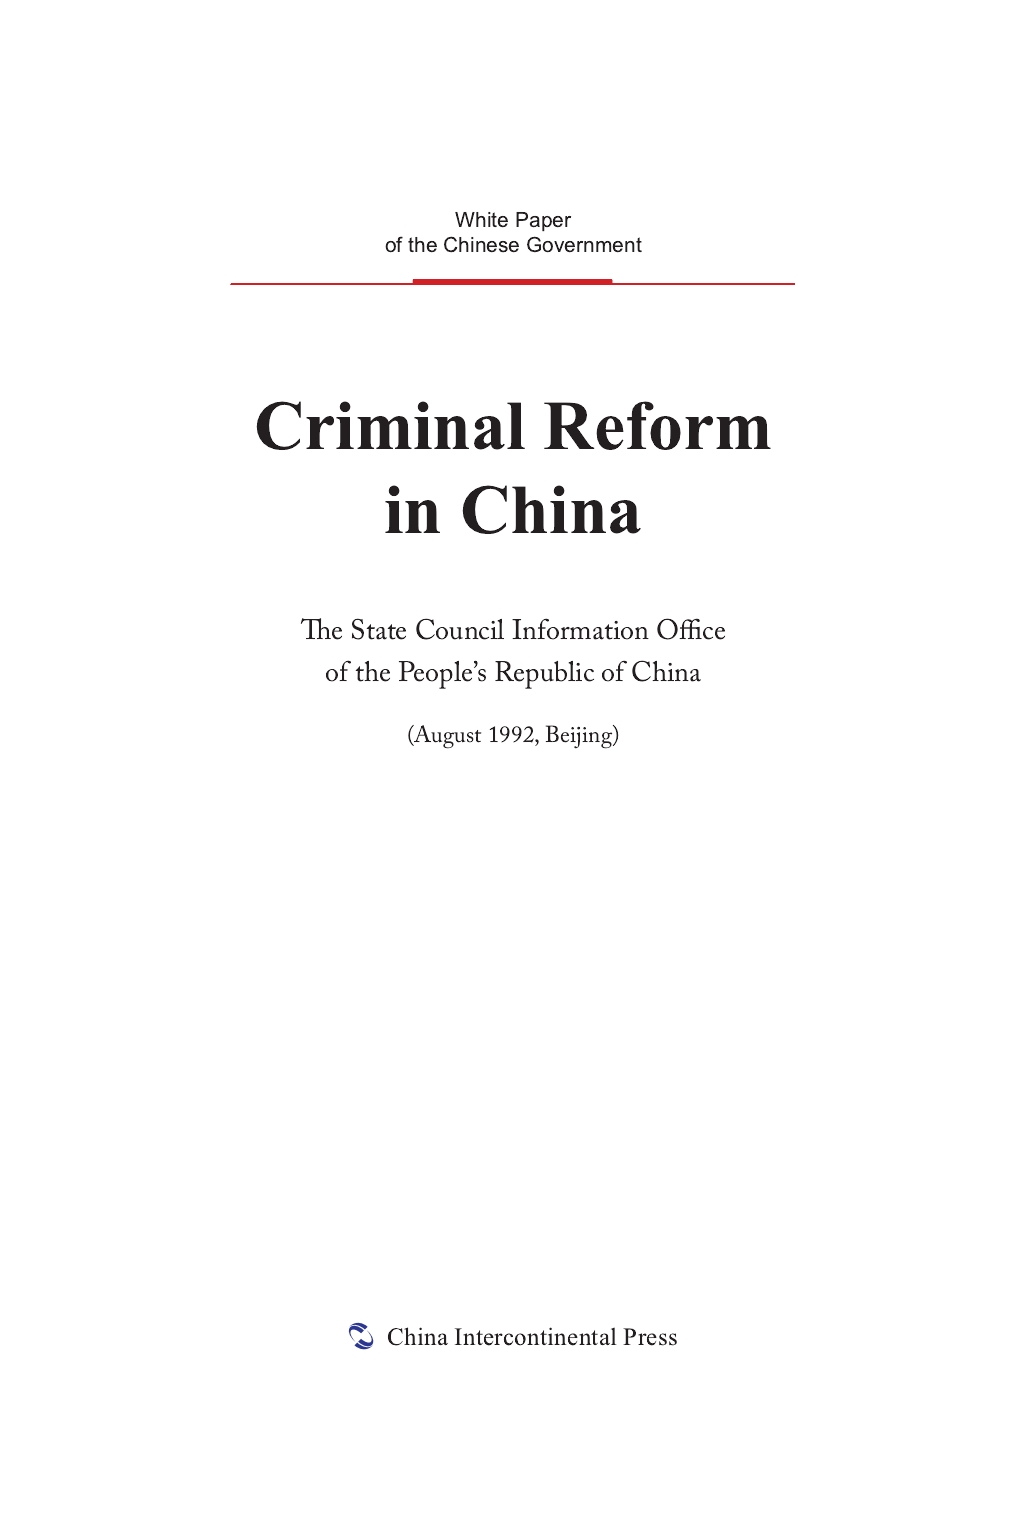 Criminal Reform in China